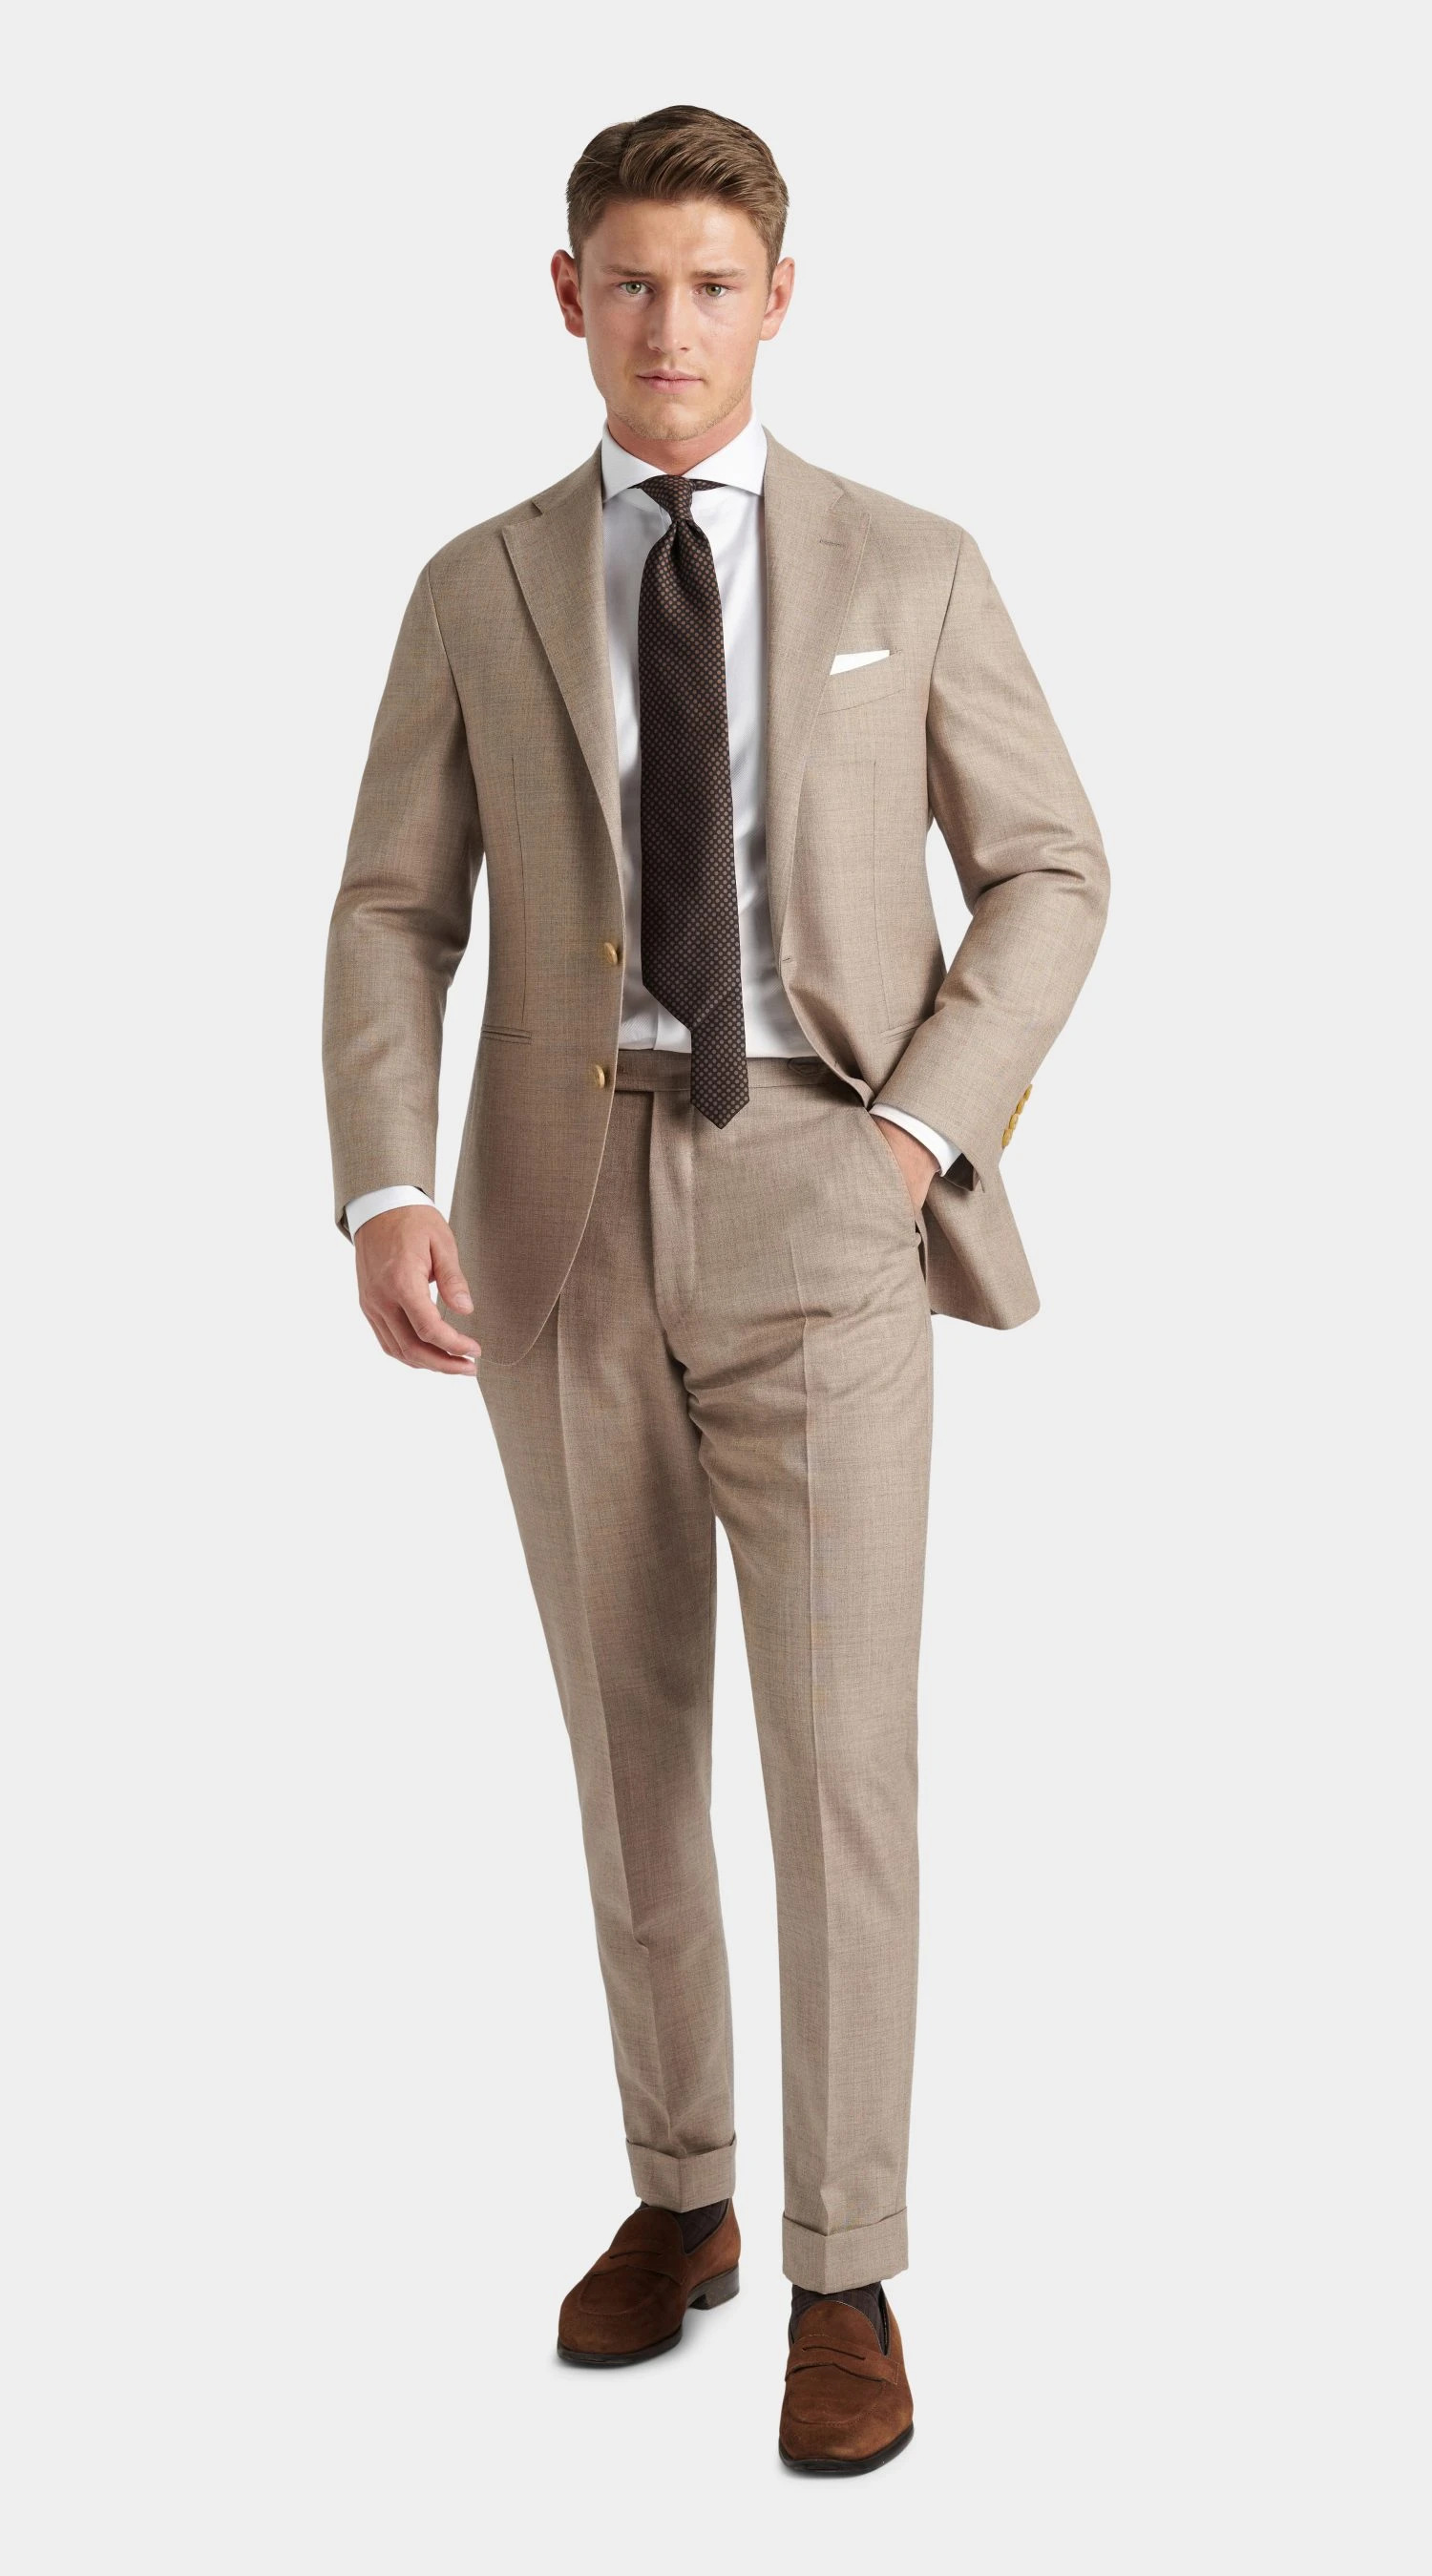 NEW beige / tan suit in twistair fabric, with brown tie